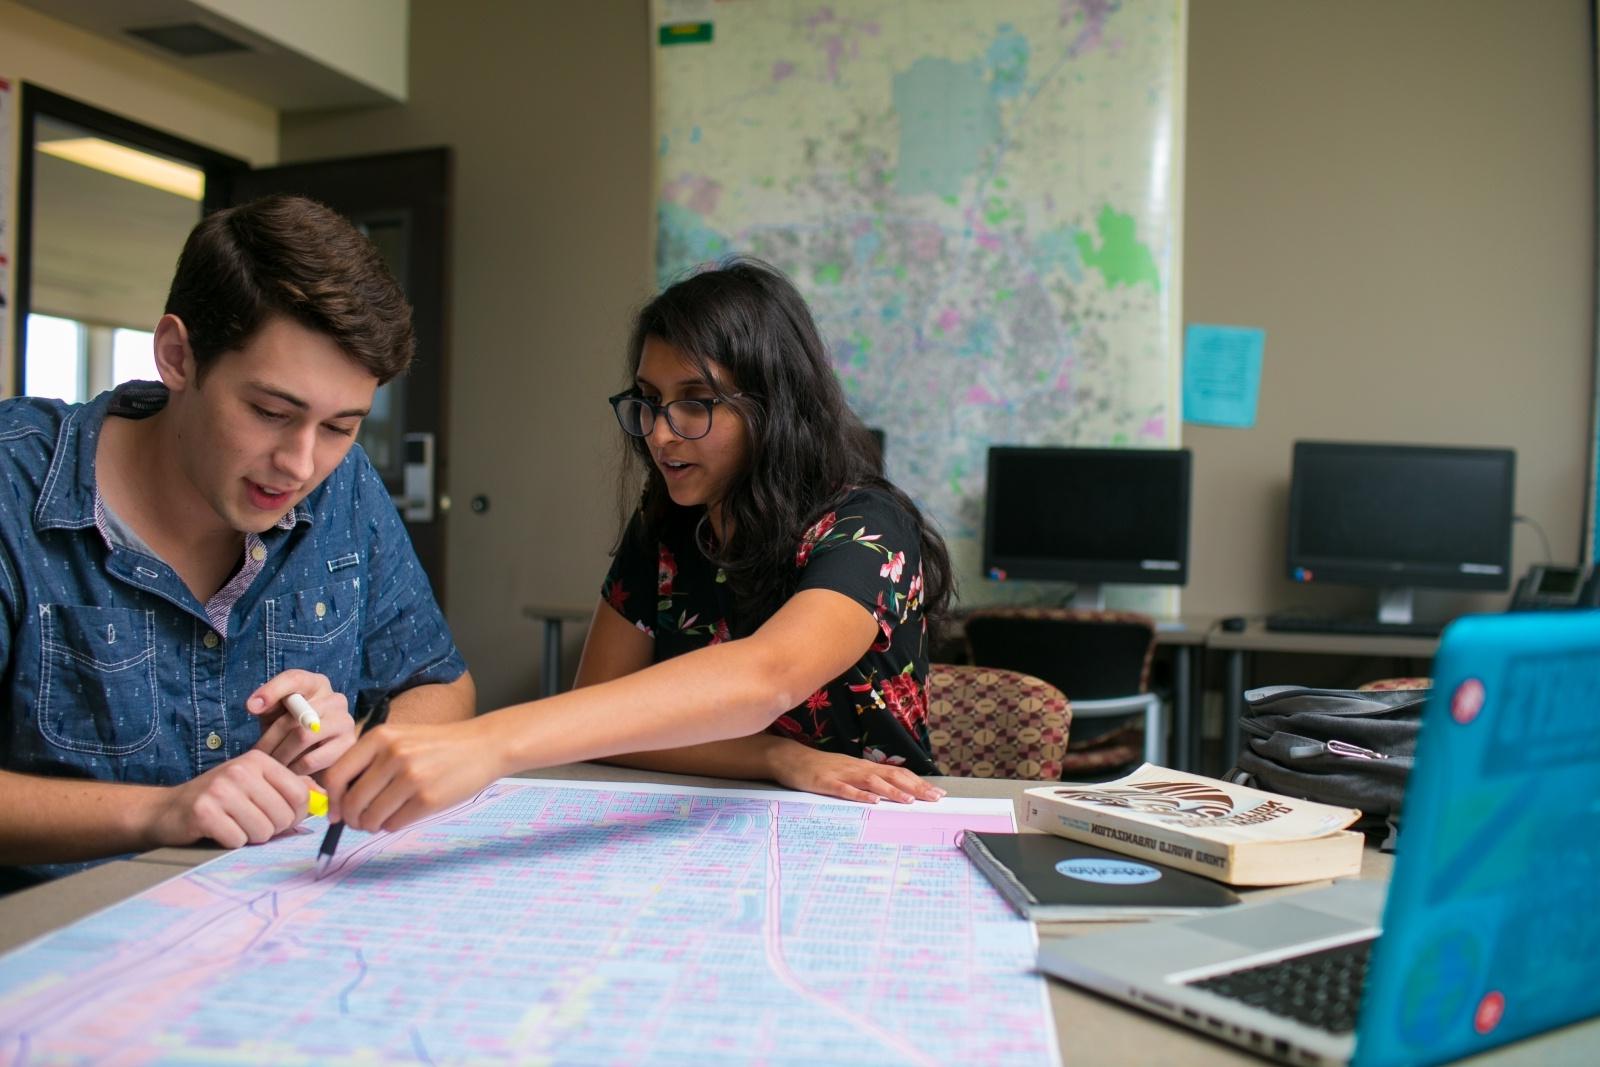 Students examine GIS map